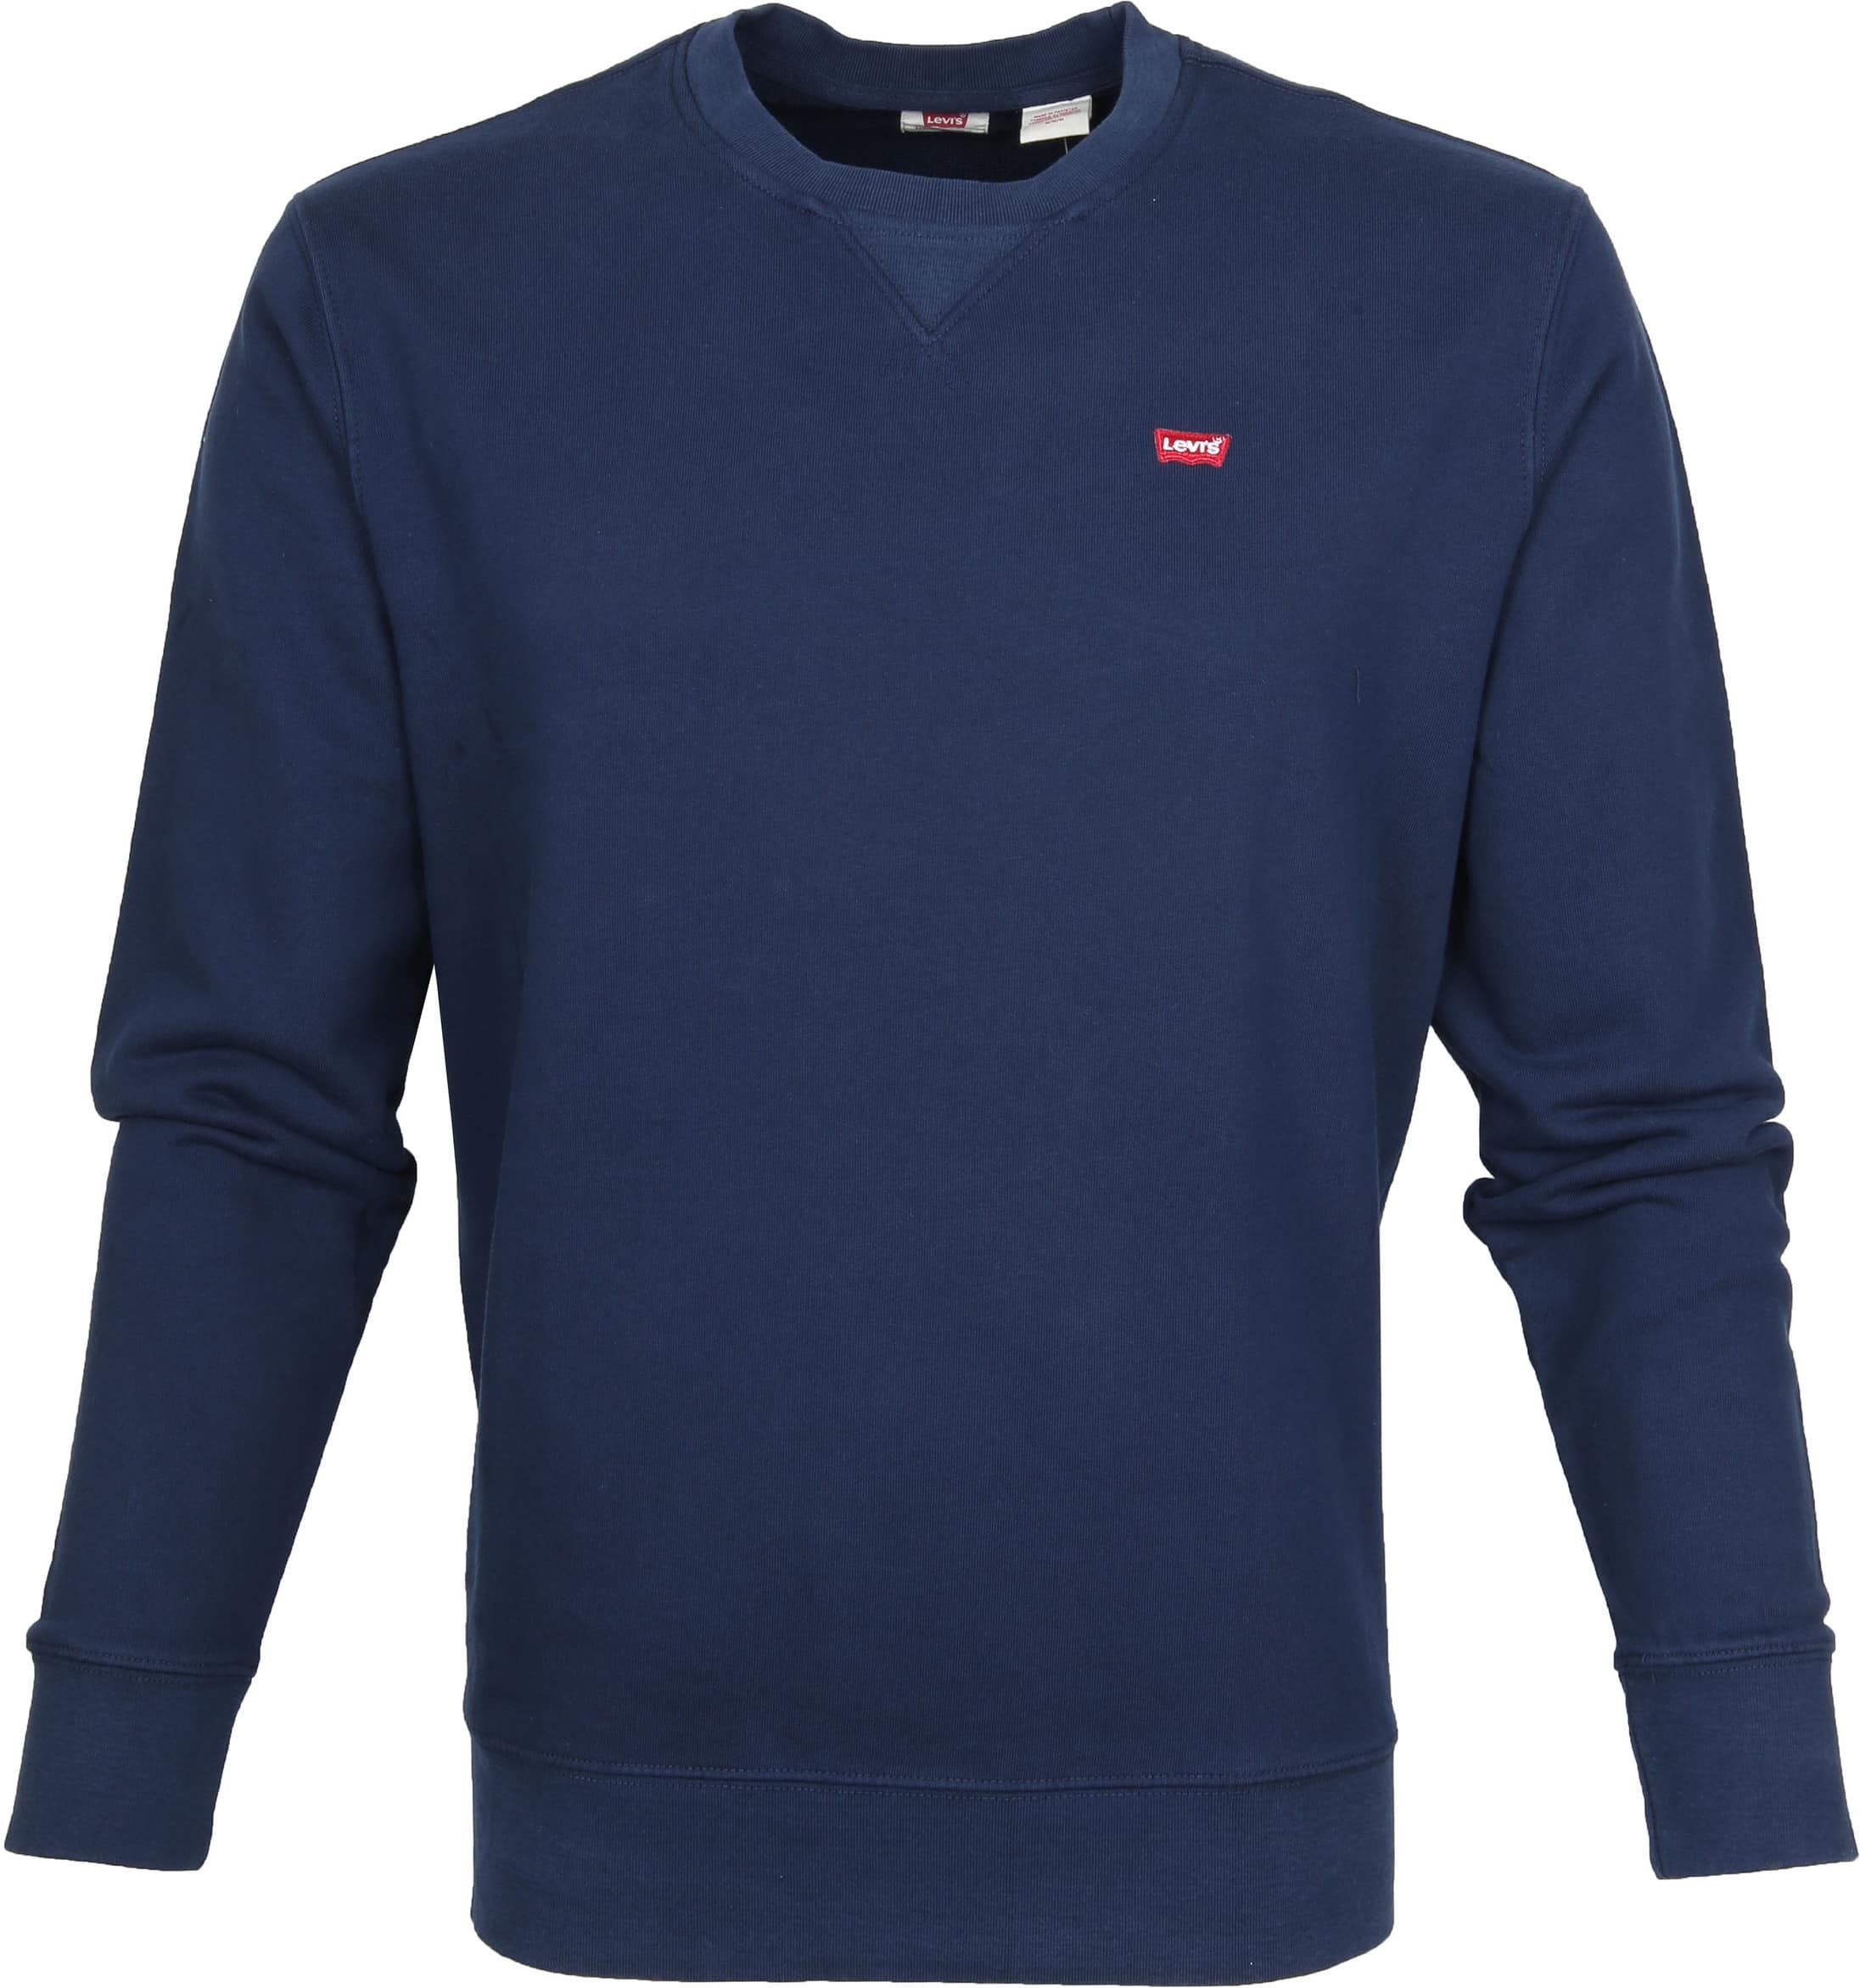 Levi's Original Sweater Dark Dark Blue Blue size M